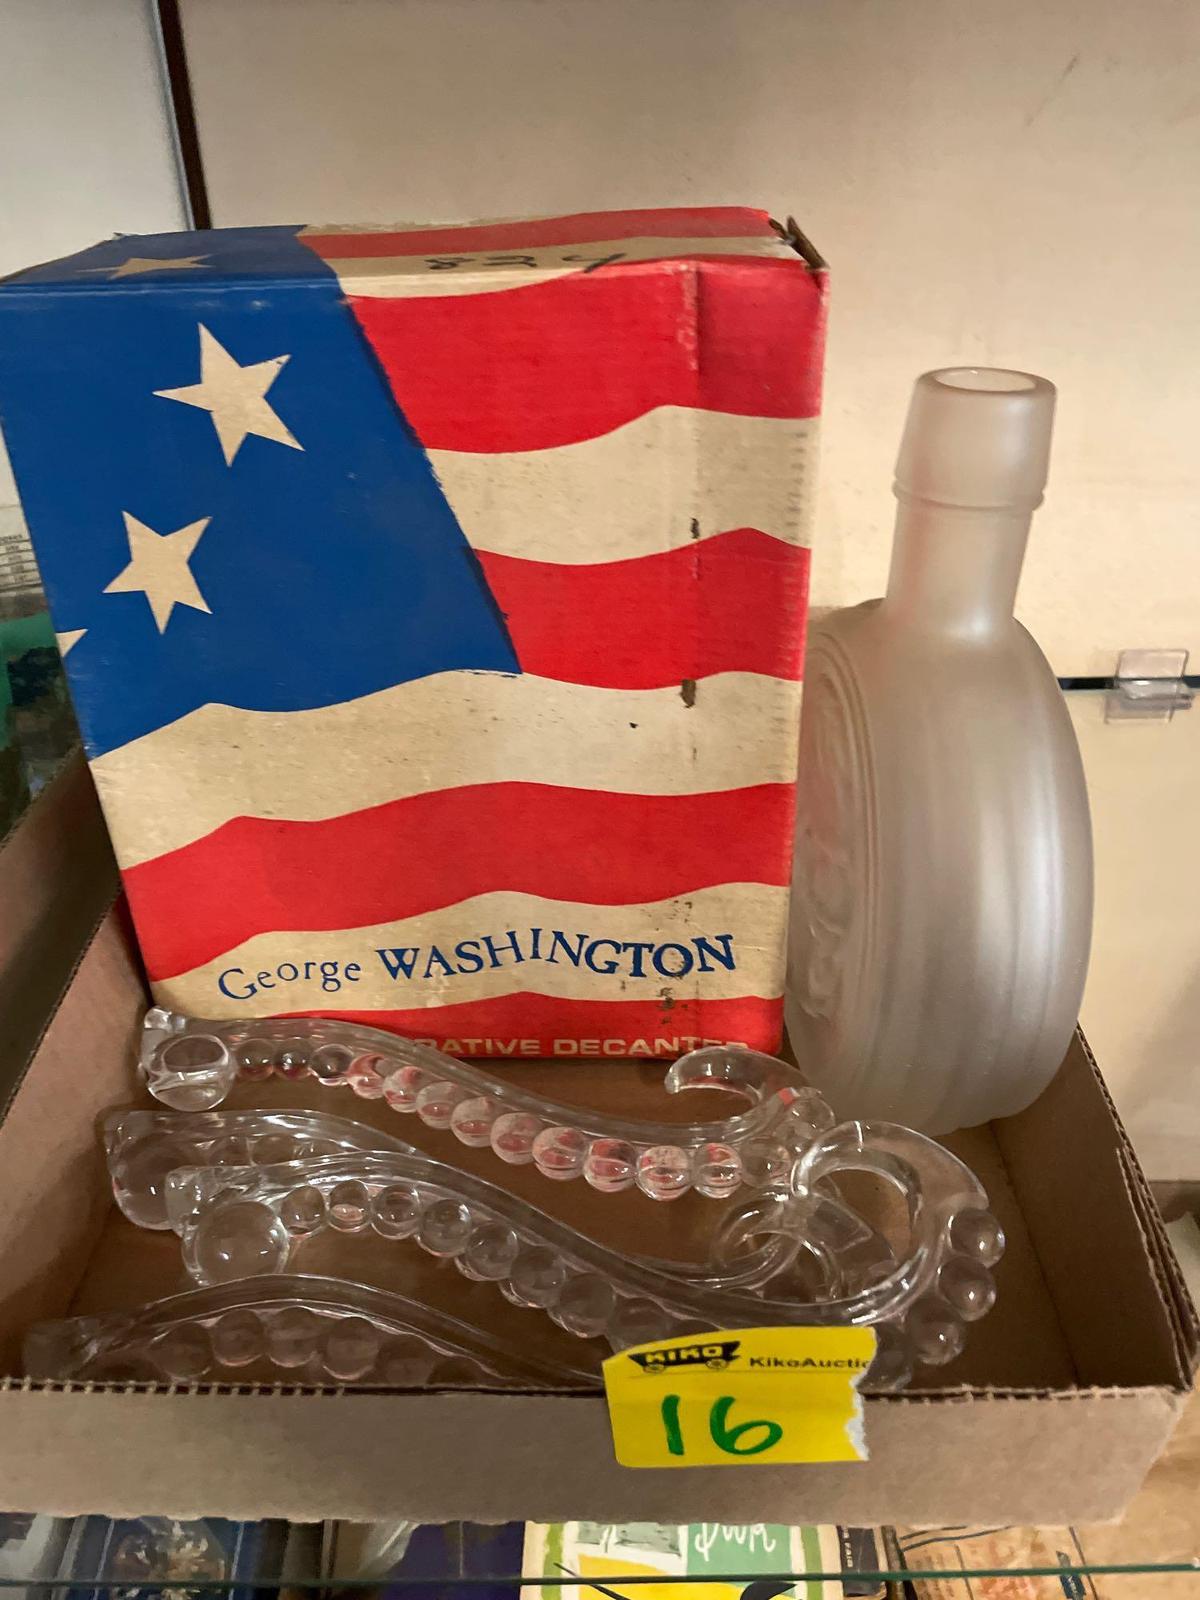 Wheaton political bottles in boxes, George Washington, George McGovern, glass regulators